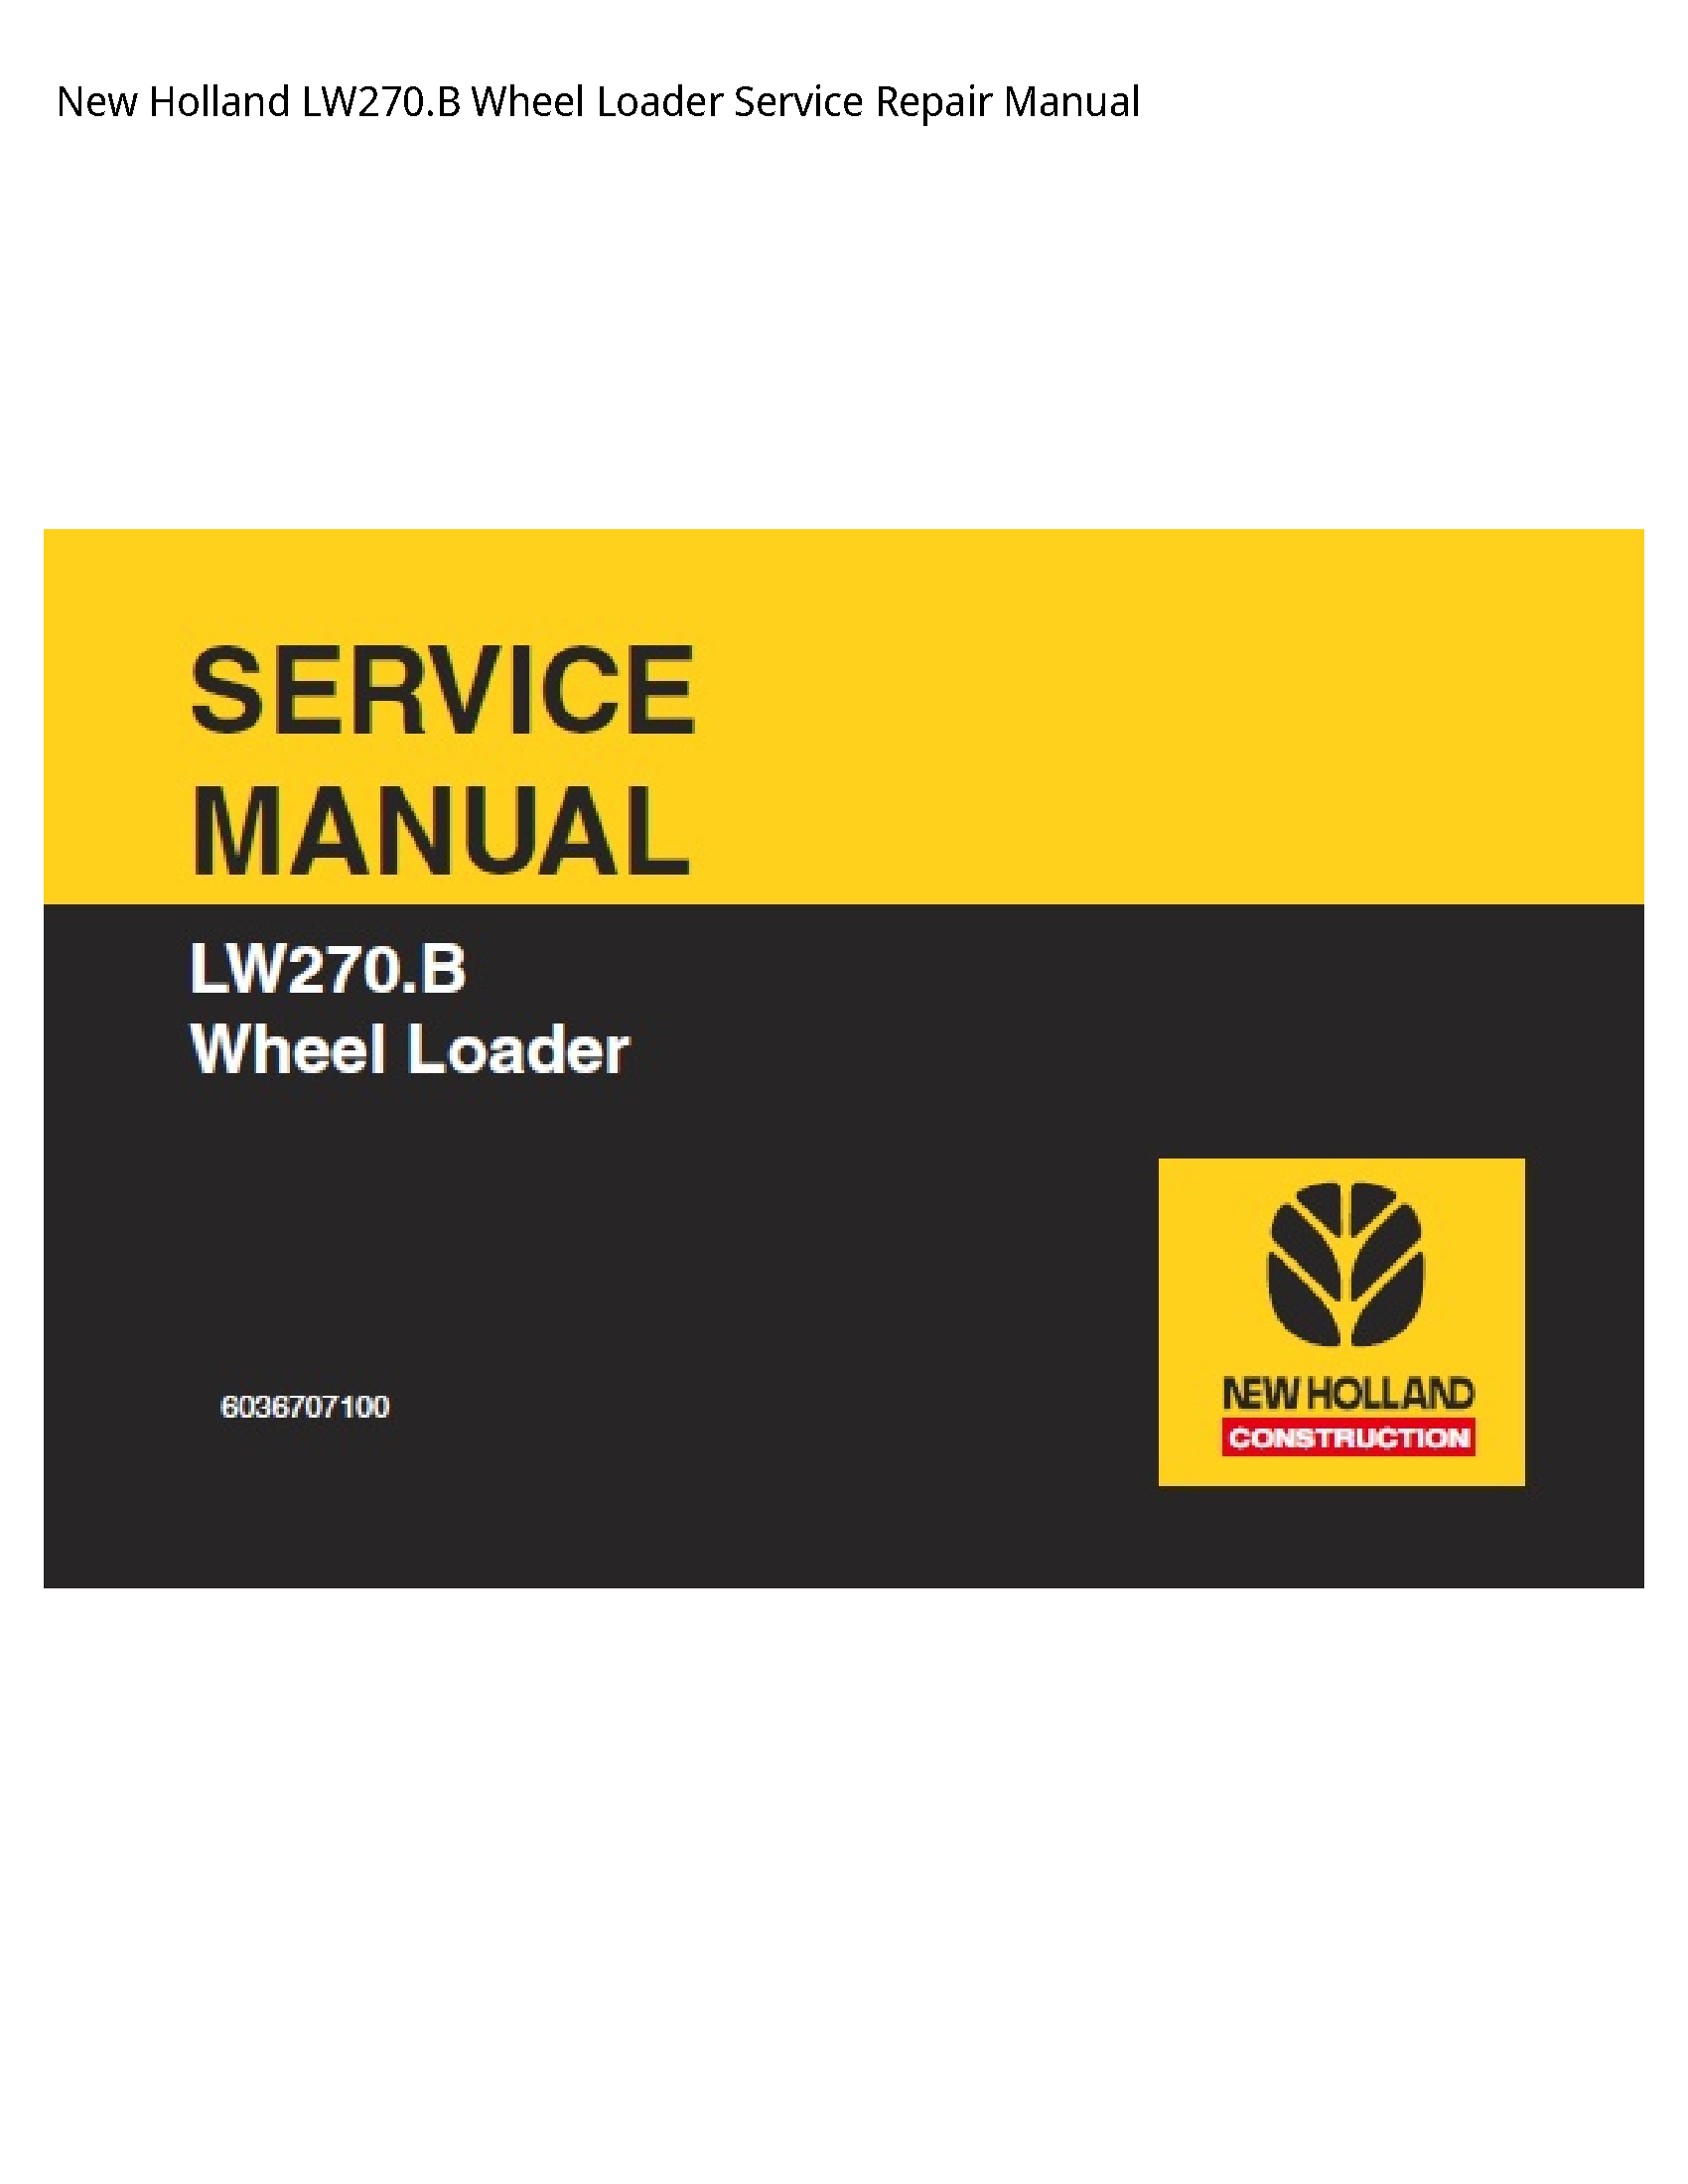 New Holland LW270.B Wheel Loader manual